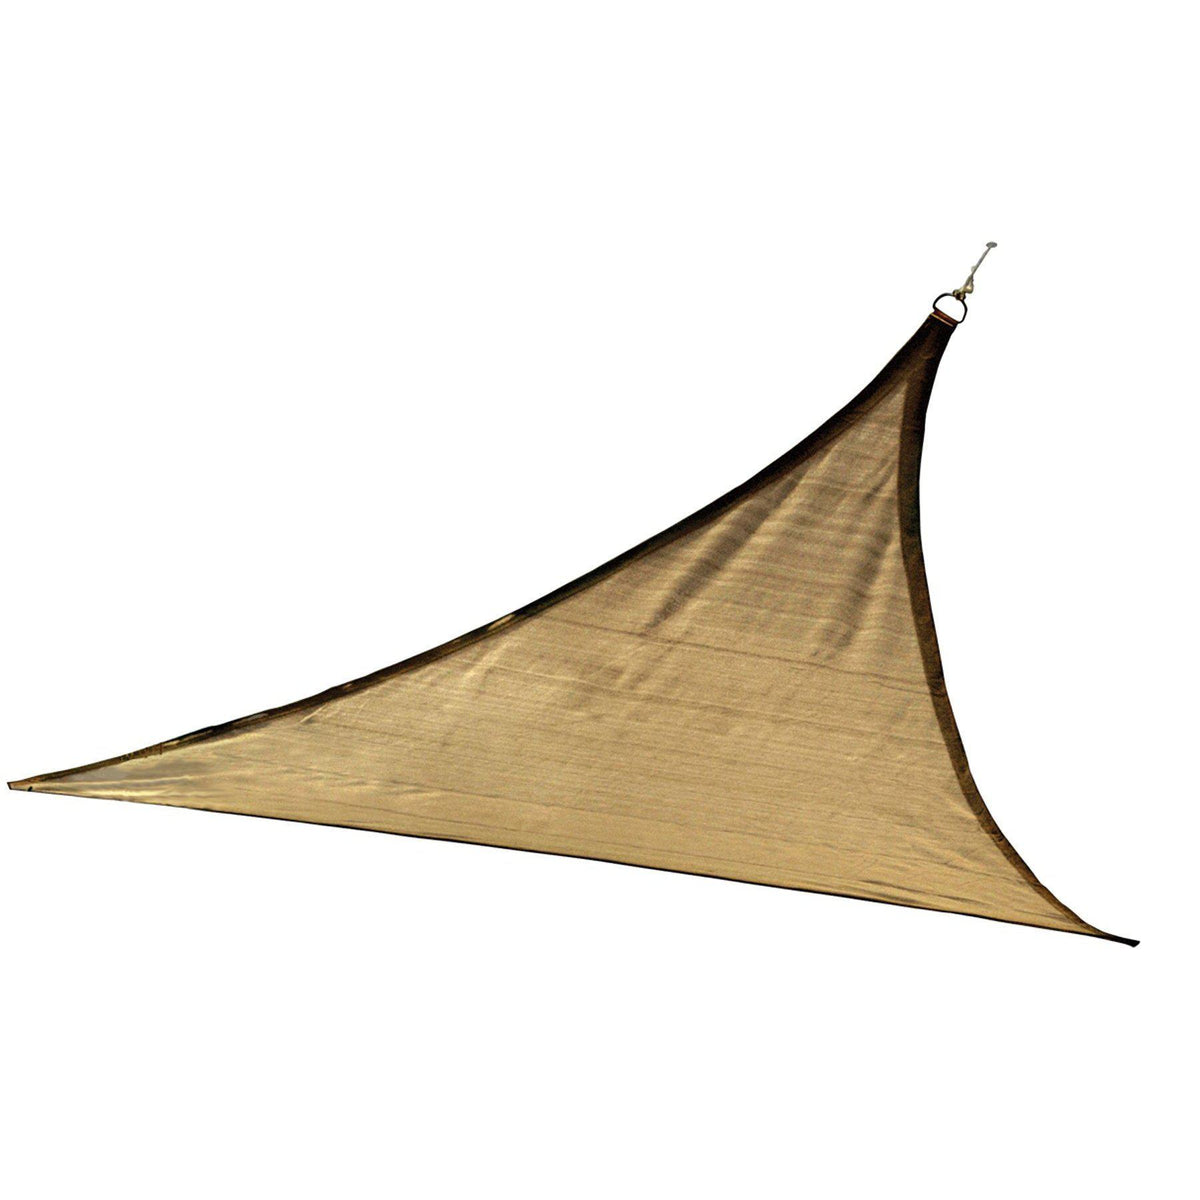 ShelterLogic Triangle Shade Sail, Sand, 12 x 12 x 12 ft.